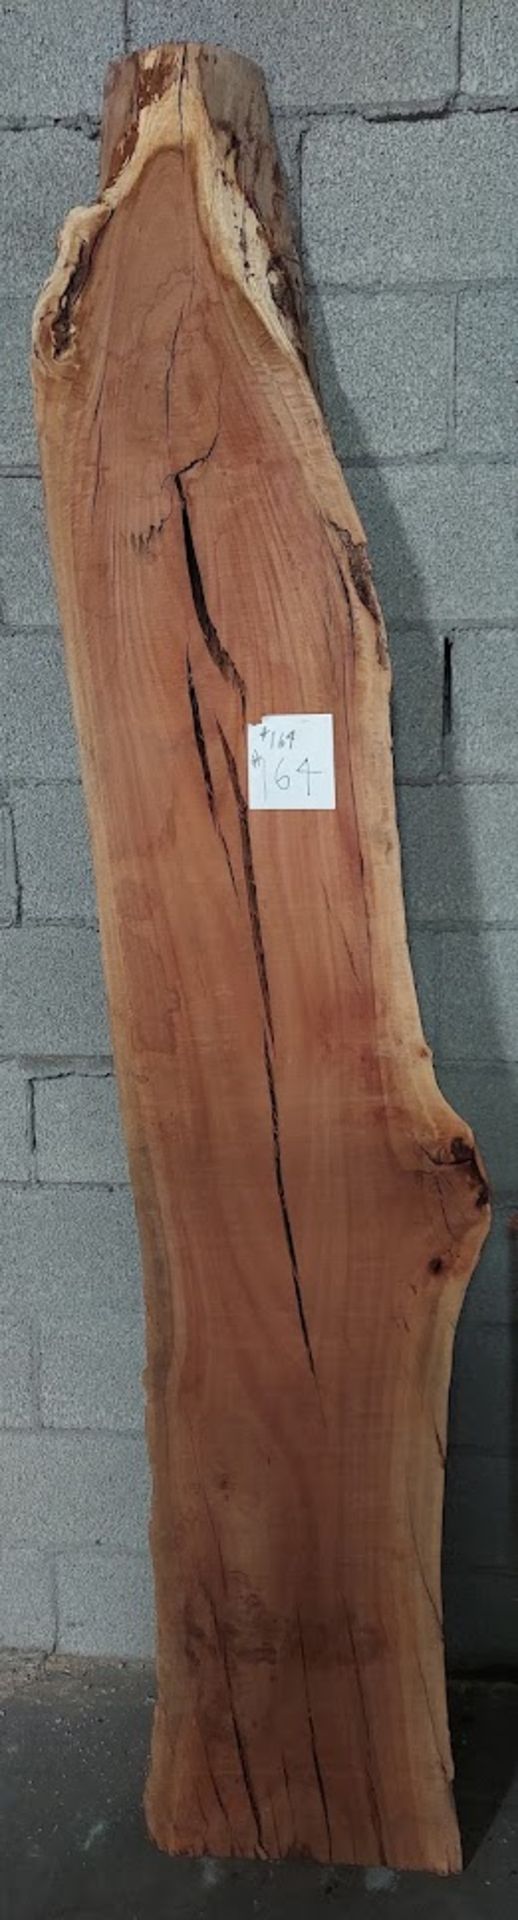 Eucalyptus Hardwood Lumber Slab, Size is appox. 86" x 11" - 18" x 2.5" Thick